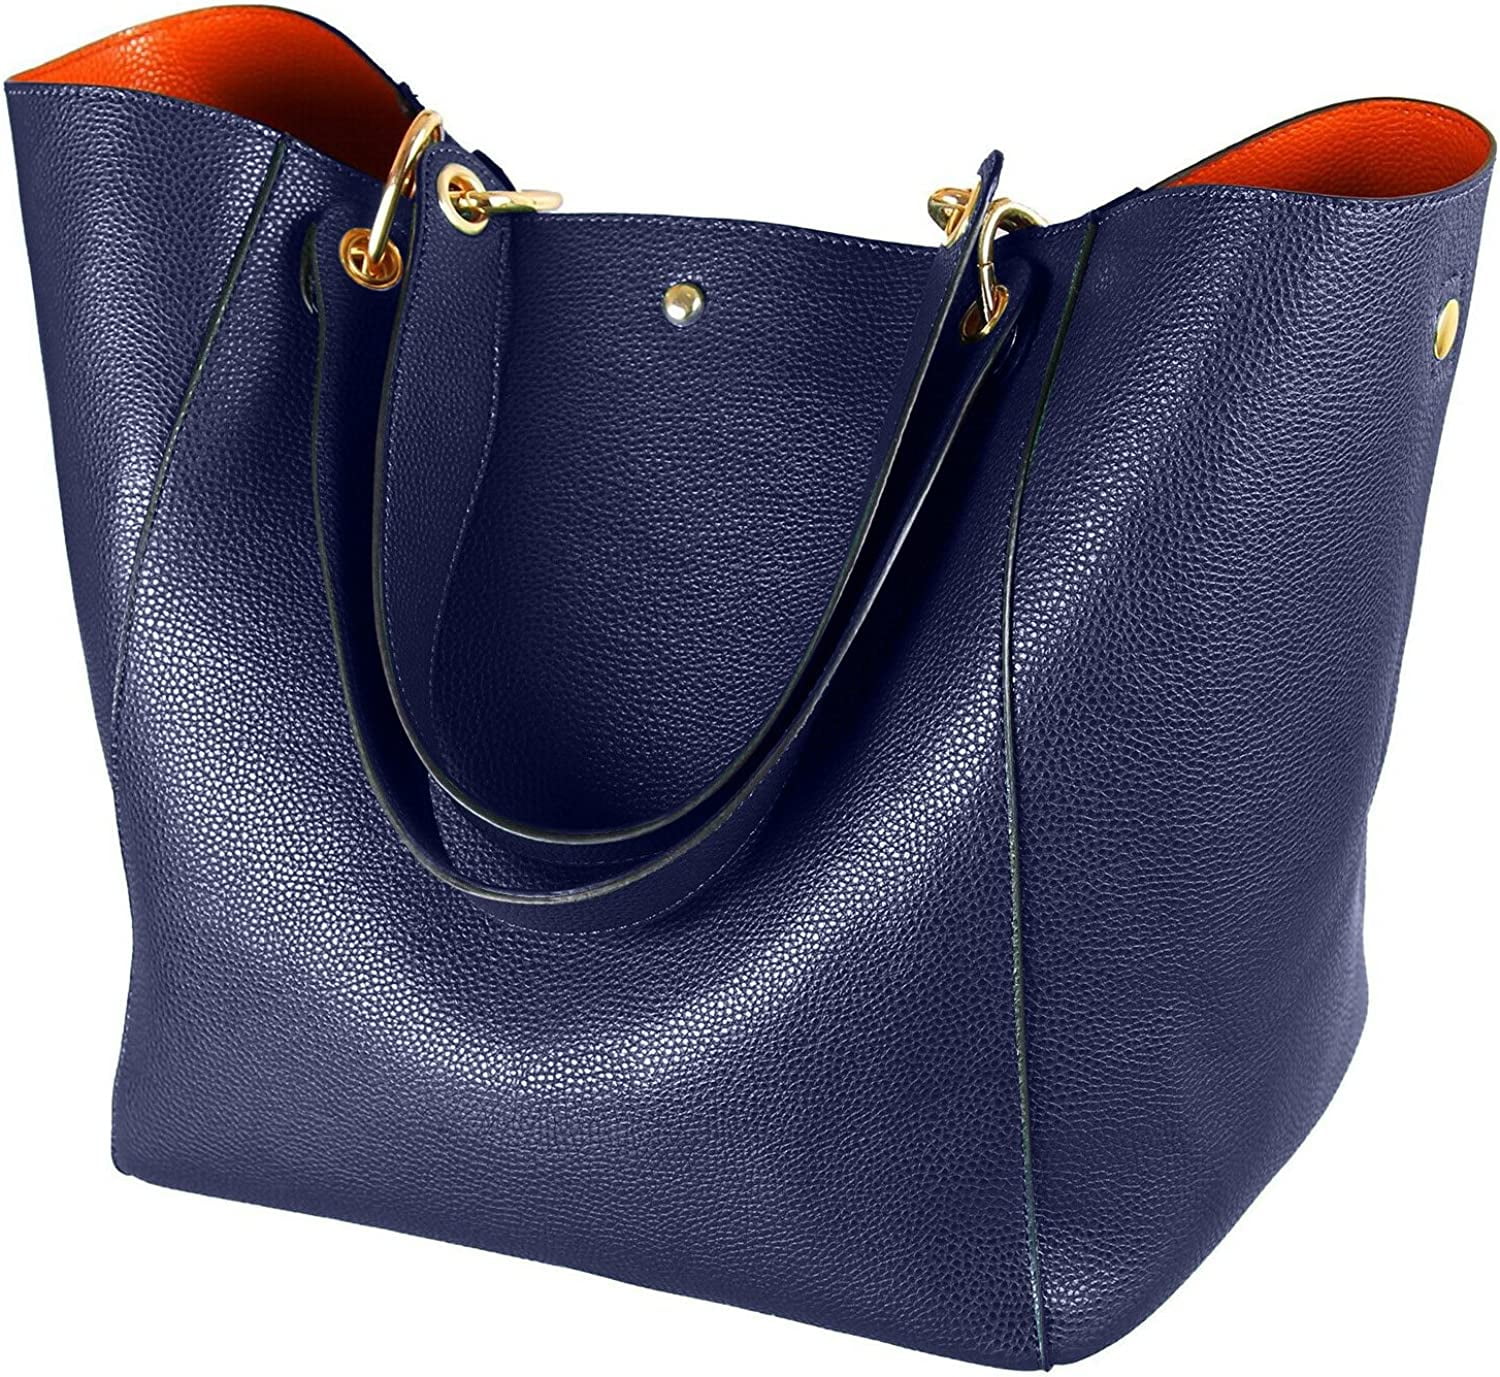 Large Capacity Work Tote Bags for Women's Leather Big Purses and handbags  ladies Waterproof Big Shoulder commuter Bag 